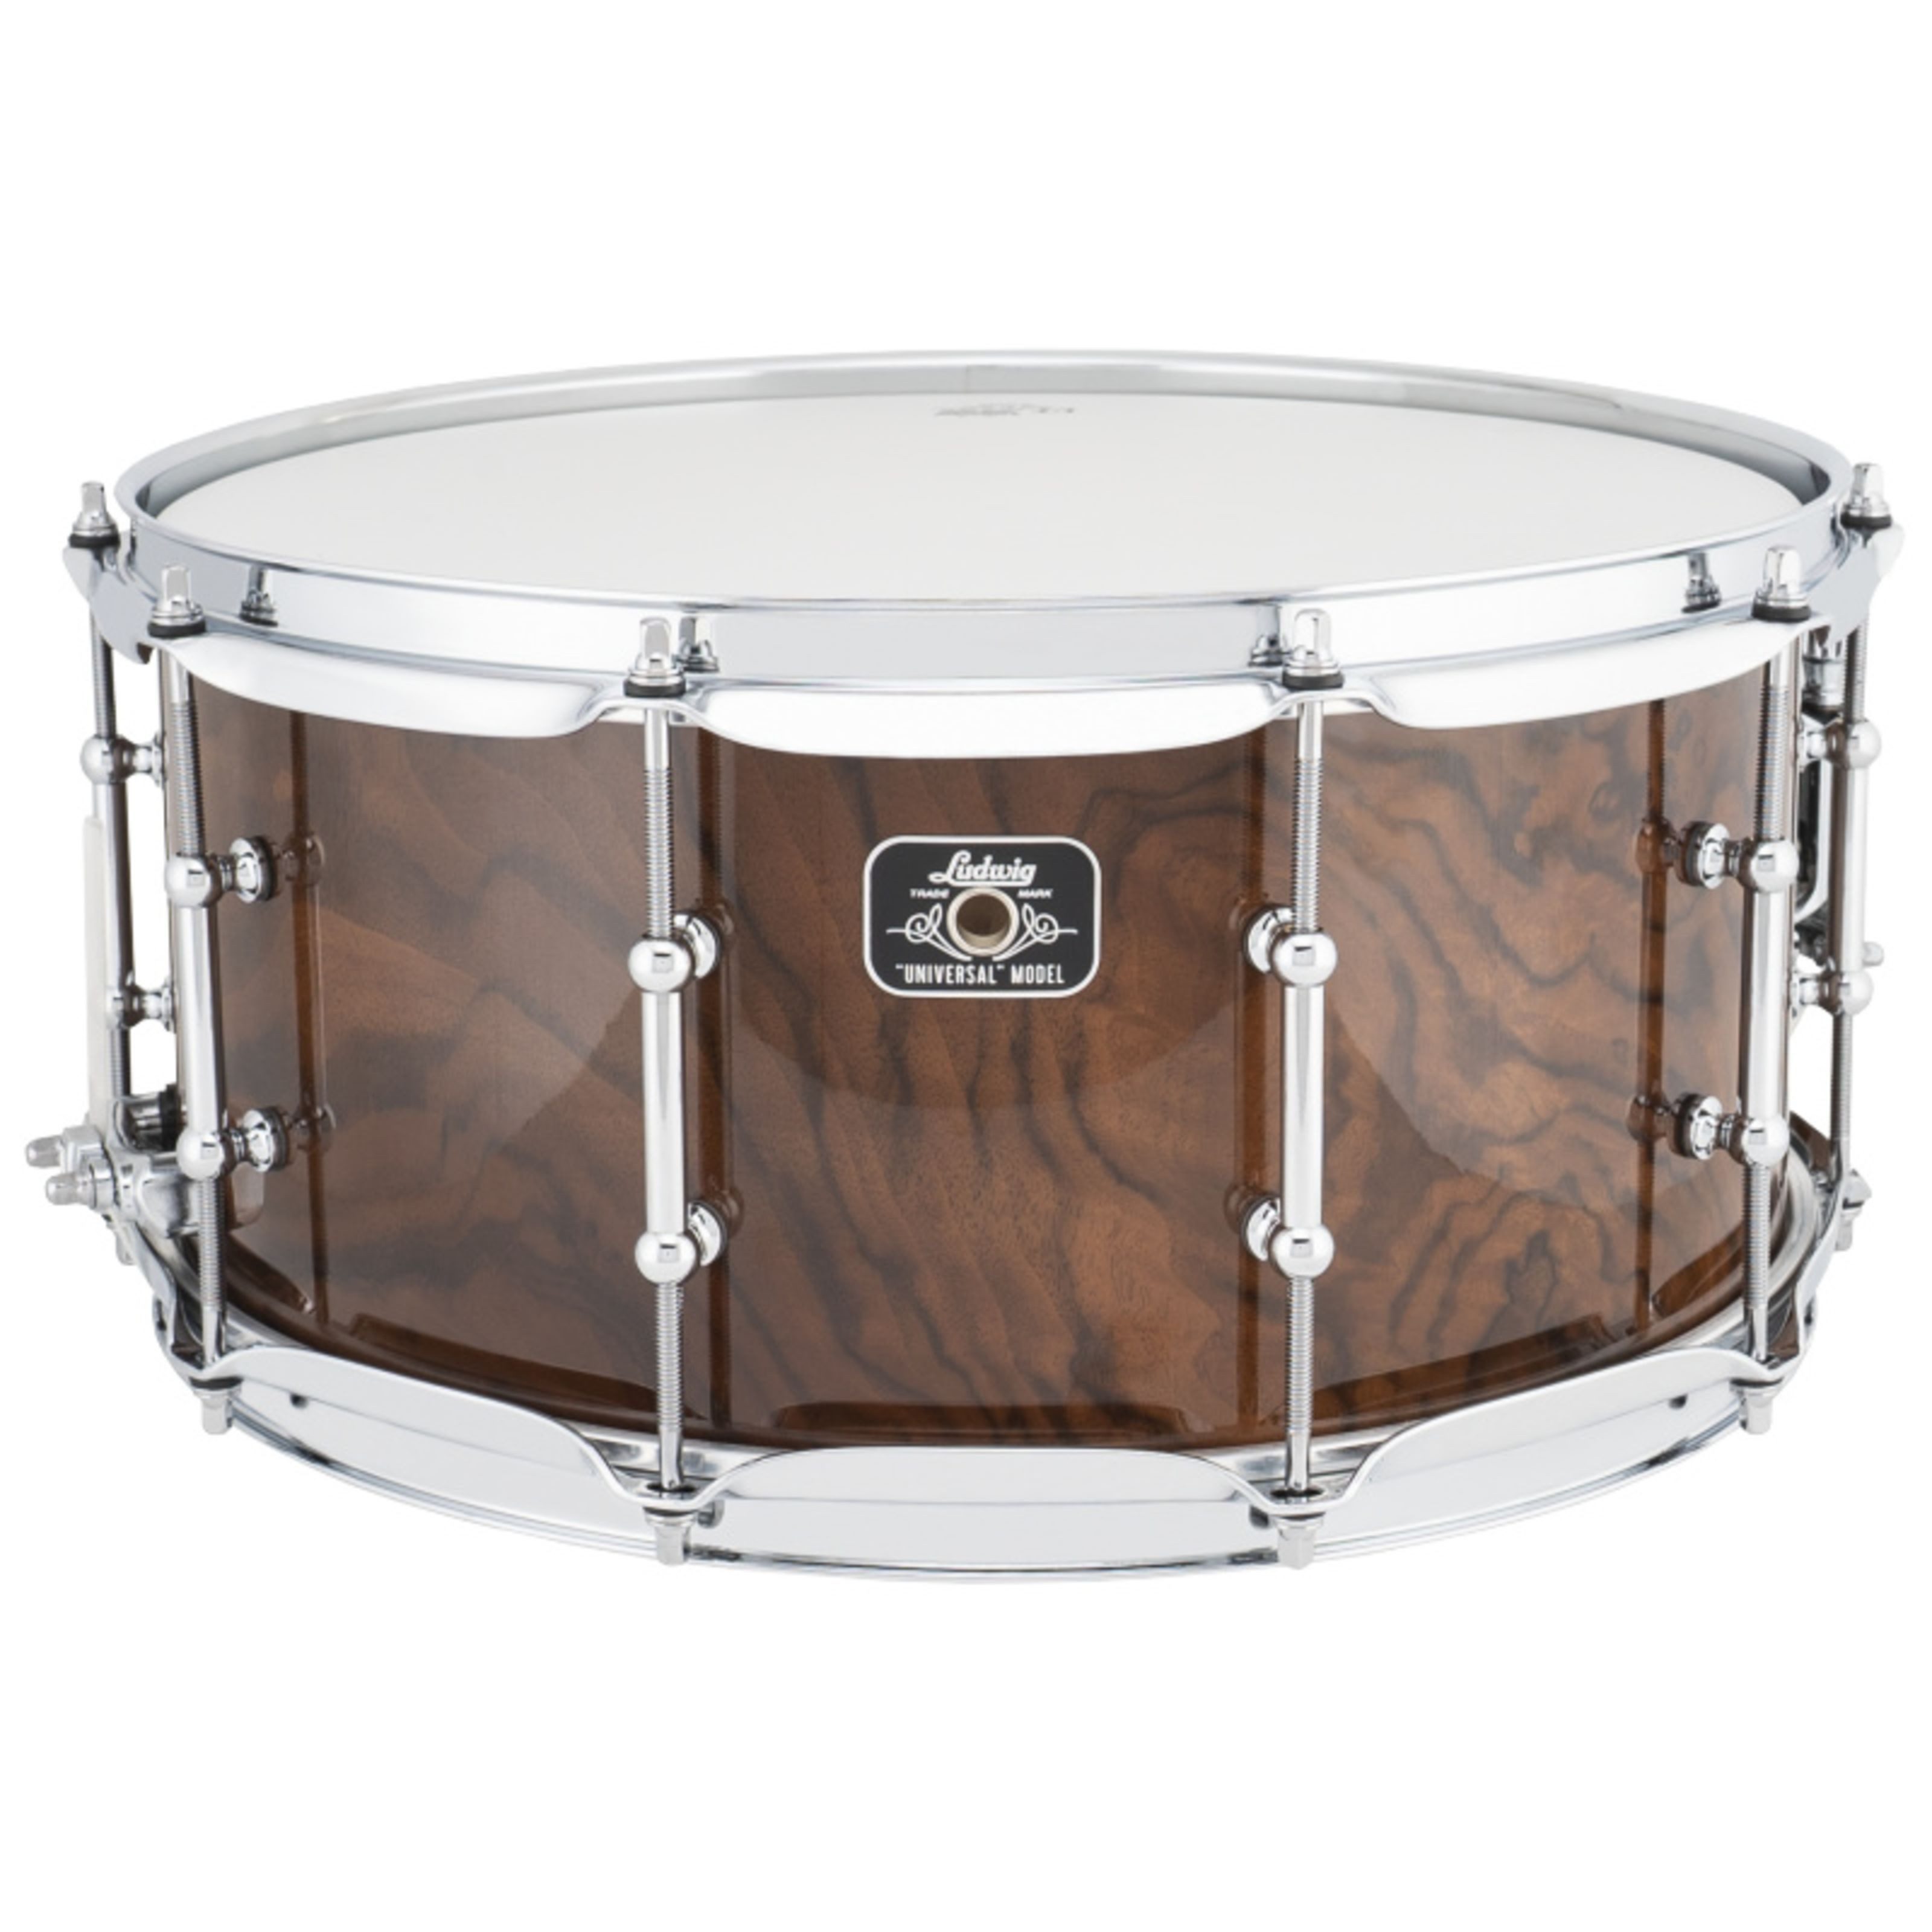 Ludwig Snare Drum, Schlagzeuge, Snare Drums, LU6514WA Universal Walnut Snare 14"x6,5" - Snare Drum